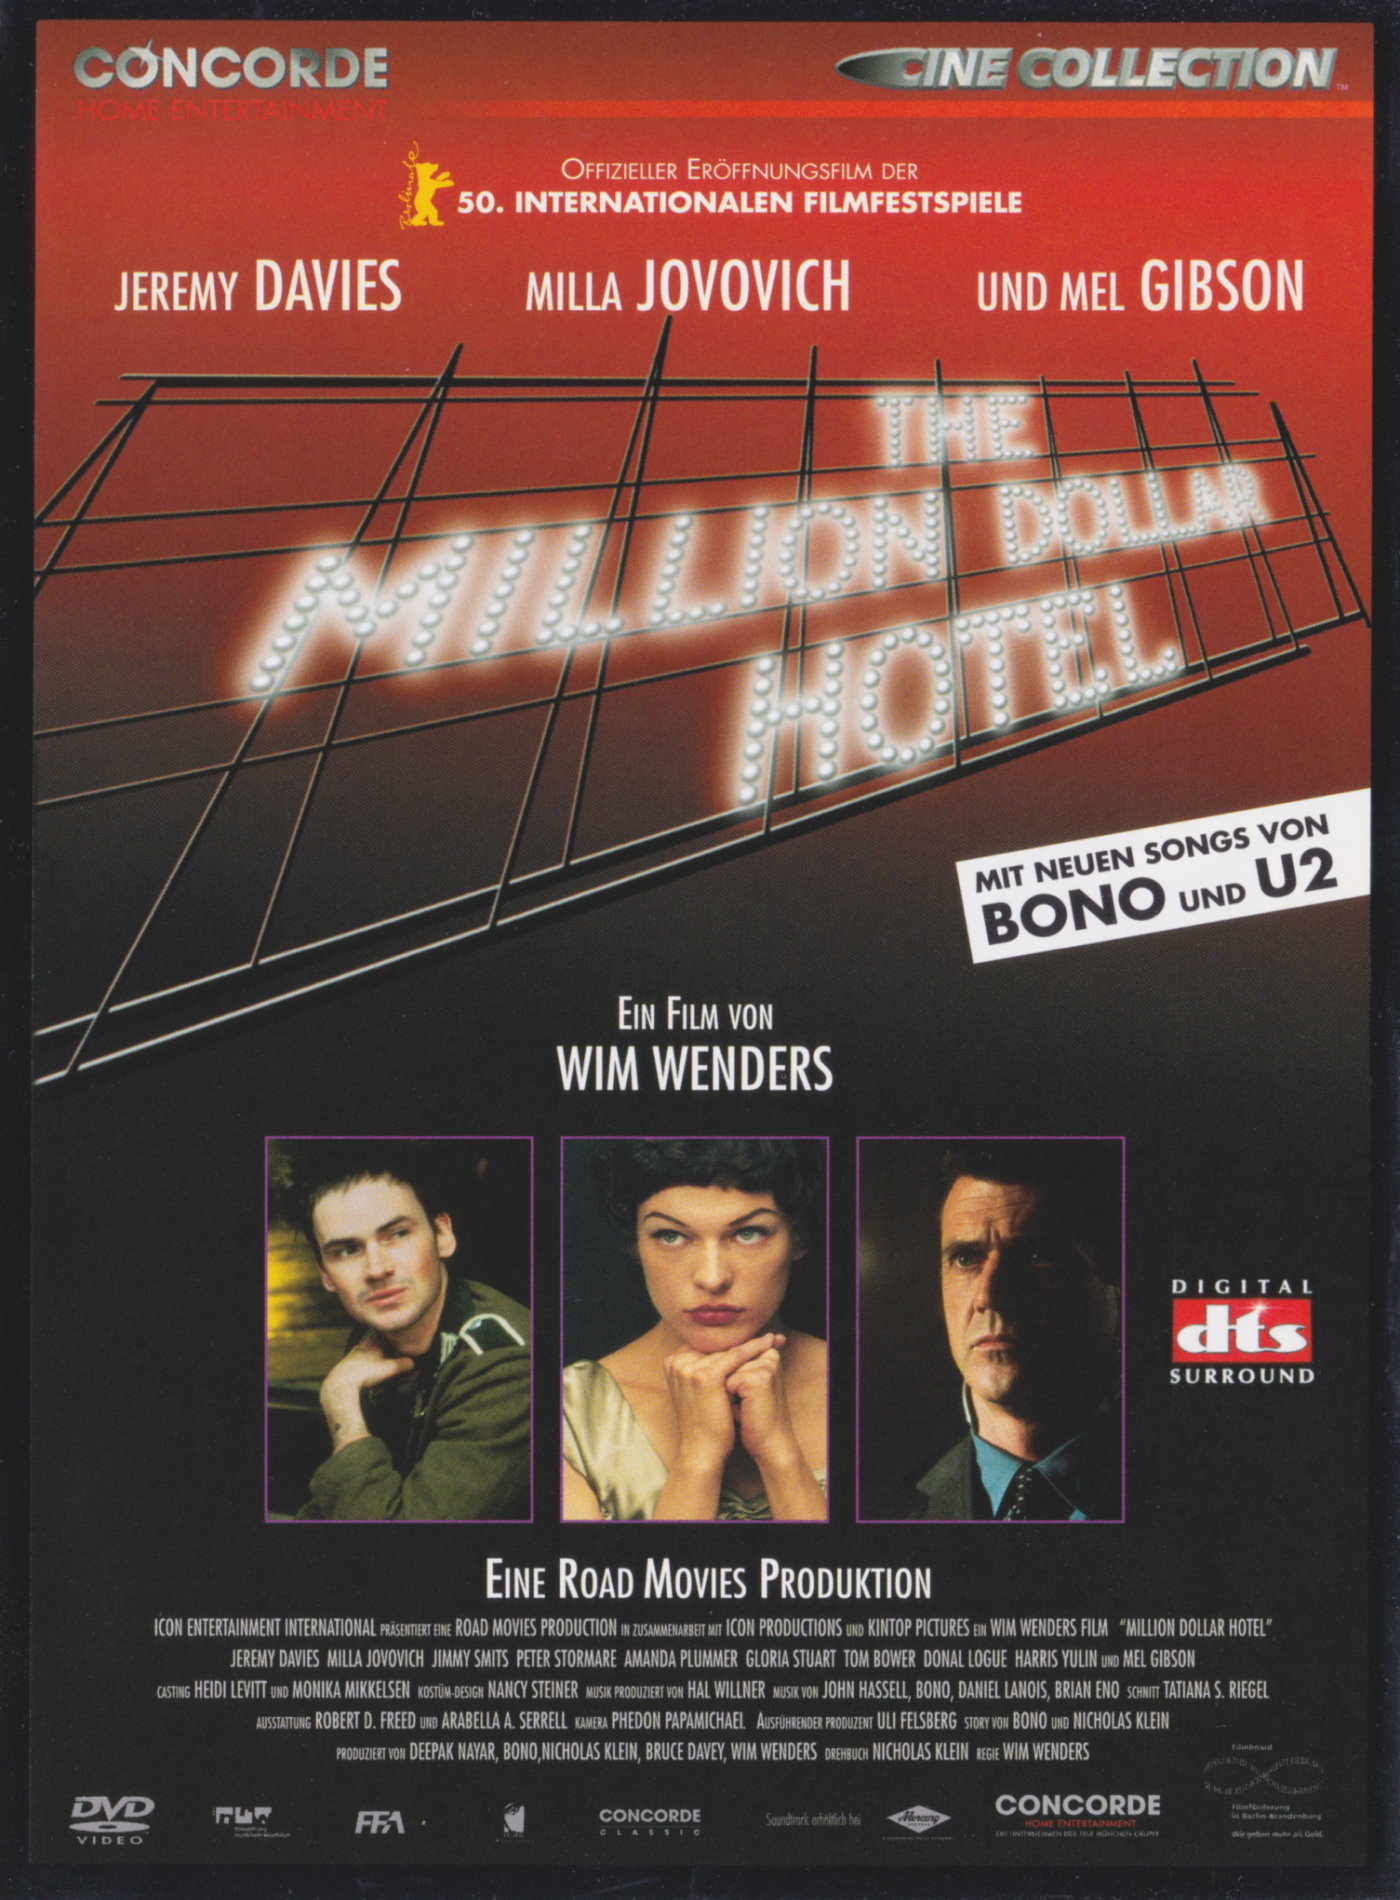 Cover - The Million Dollar Hotel.jpg